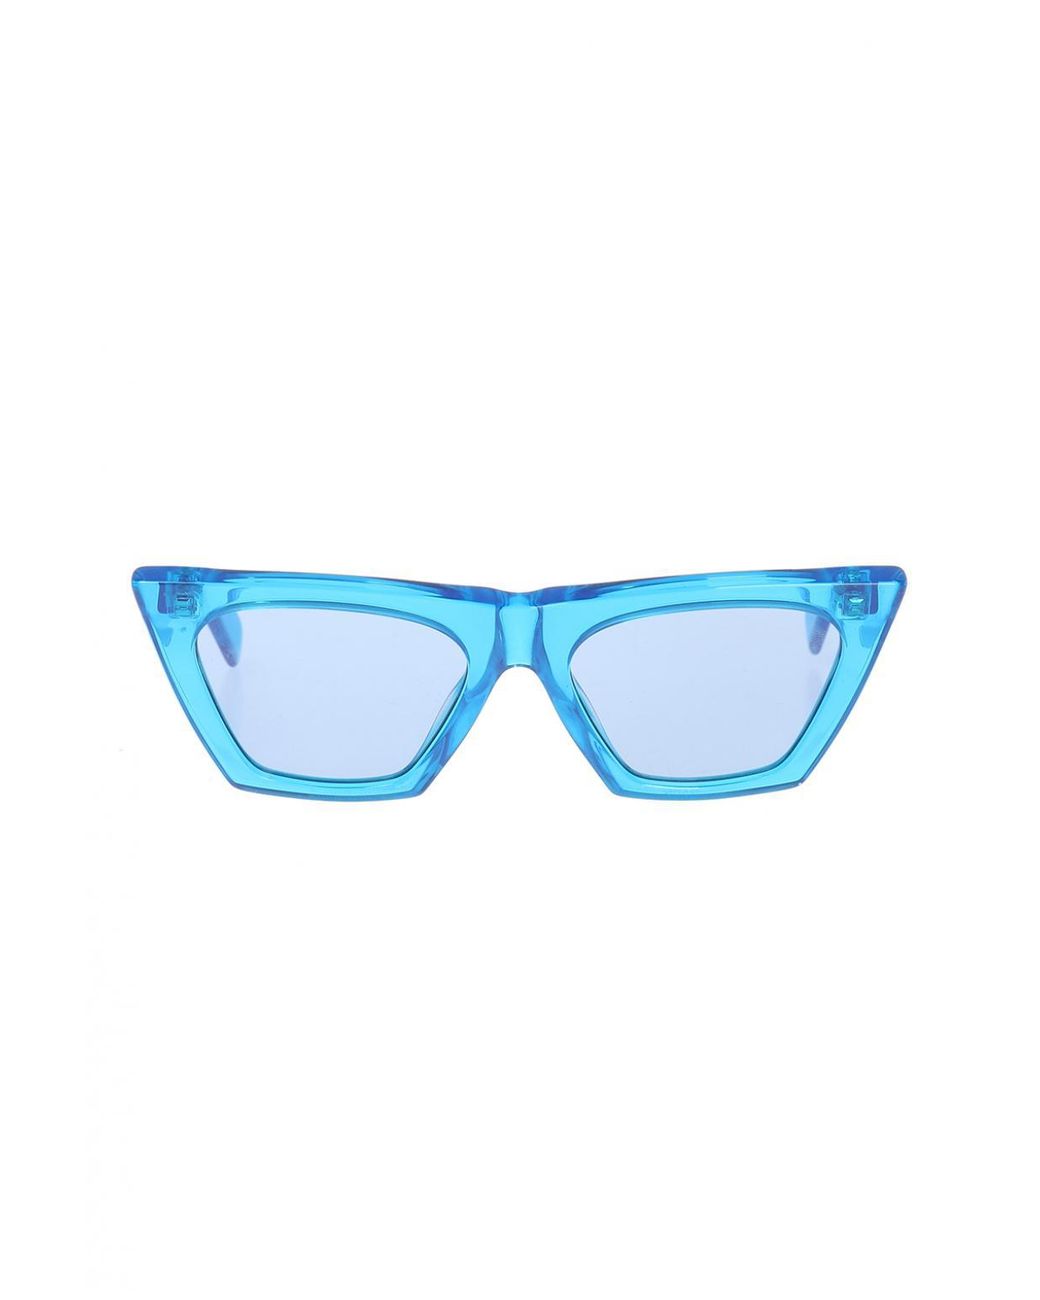 Celine Sunglasses in Blue Lyst